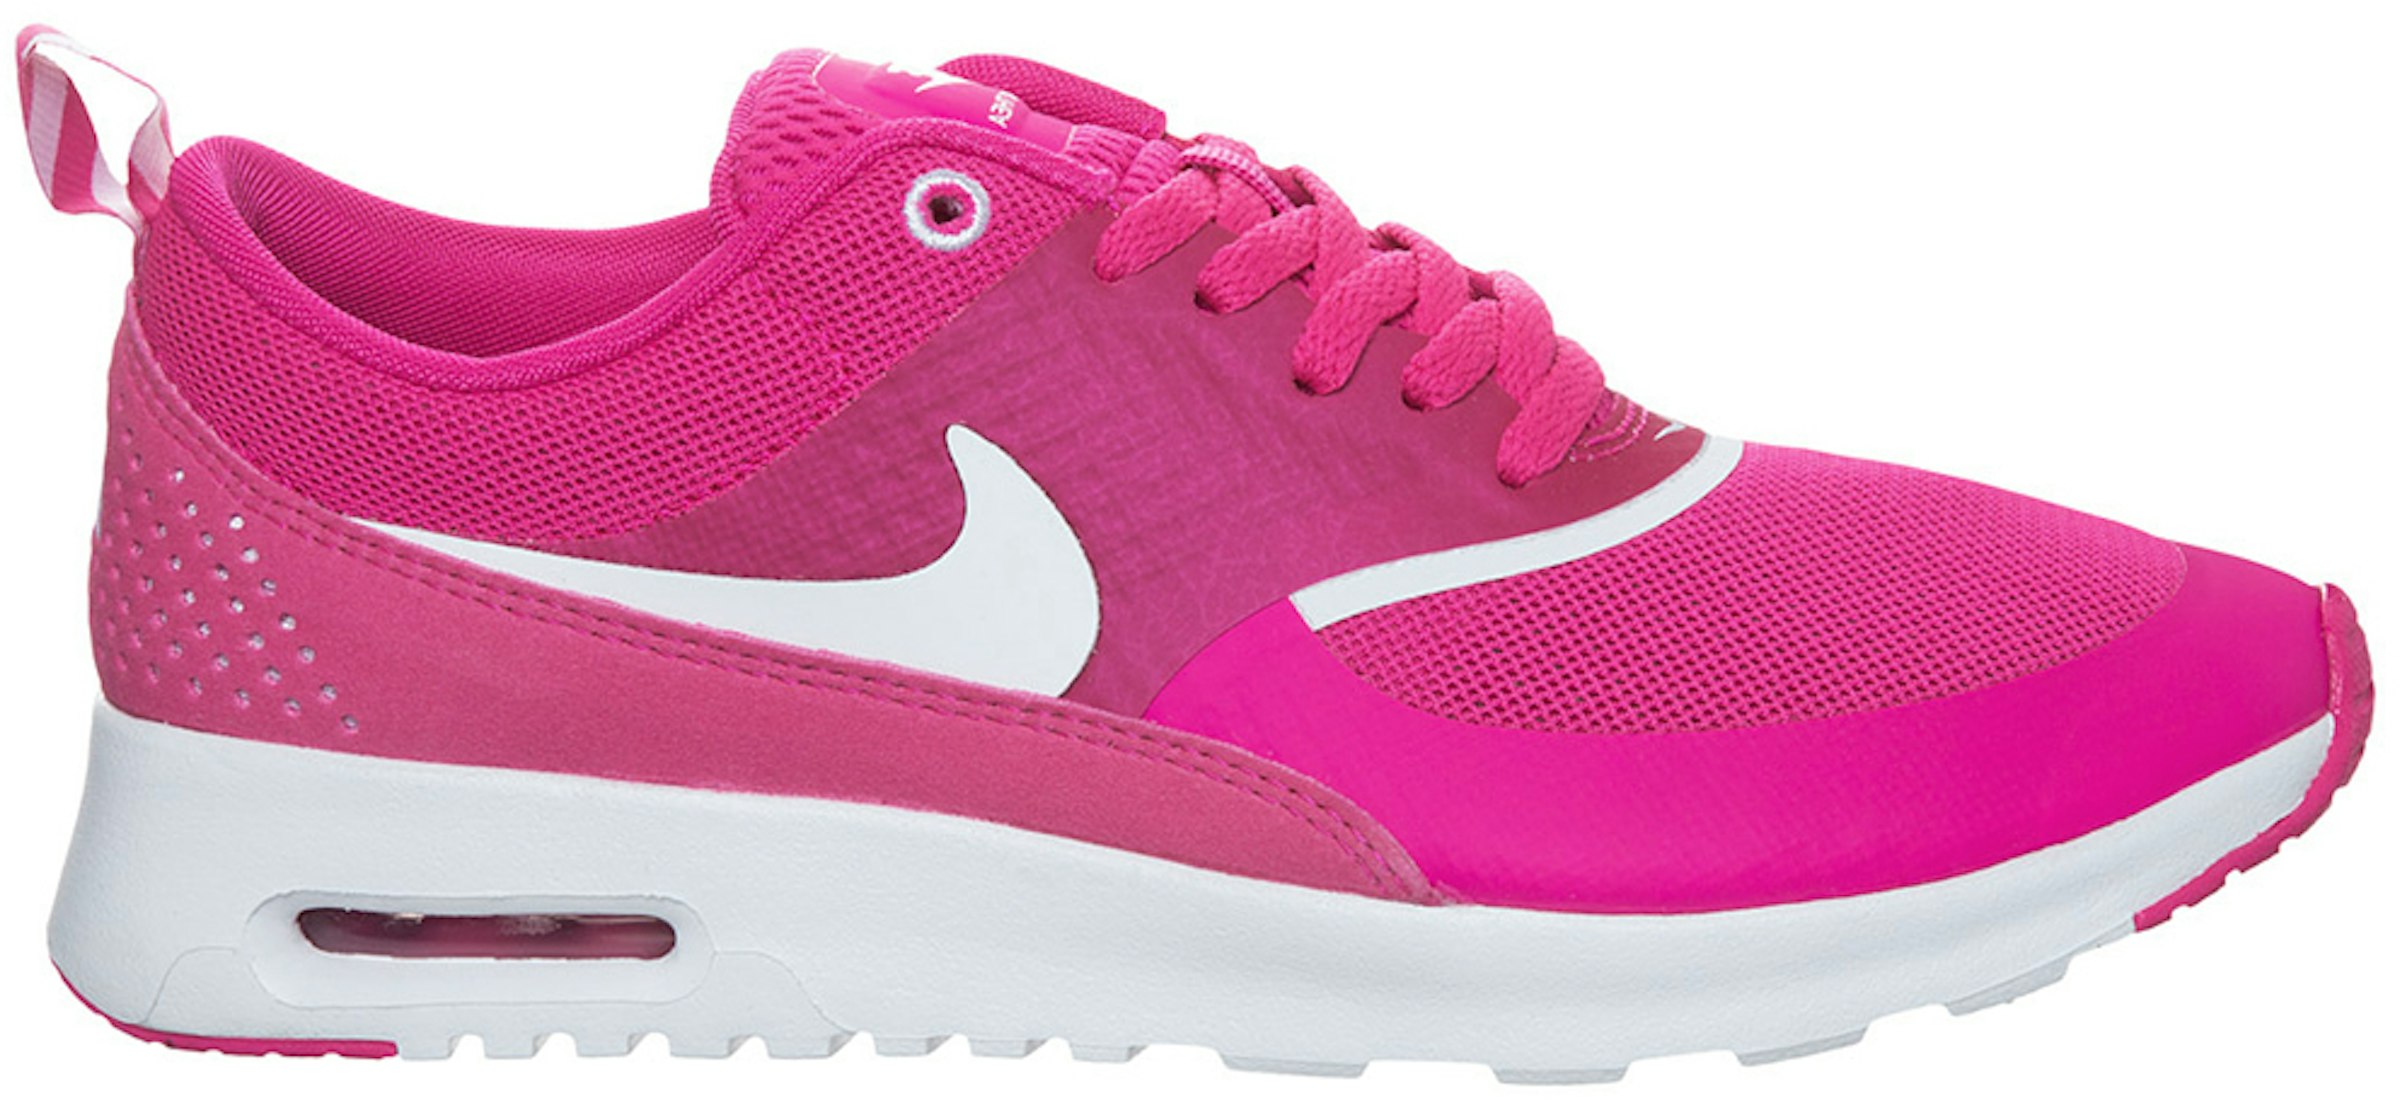 Nike Air Max Thea Pink White 599409-602 - US